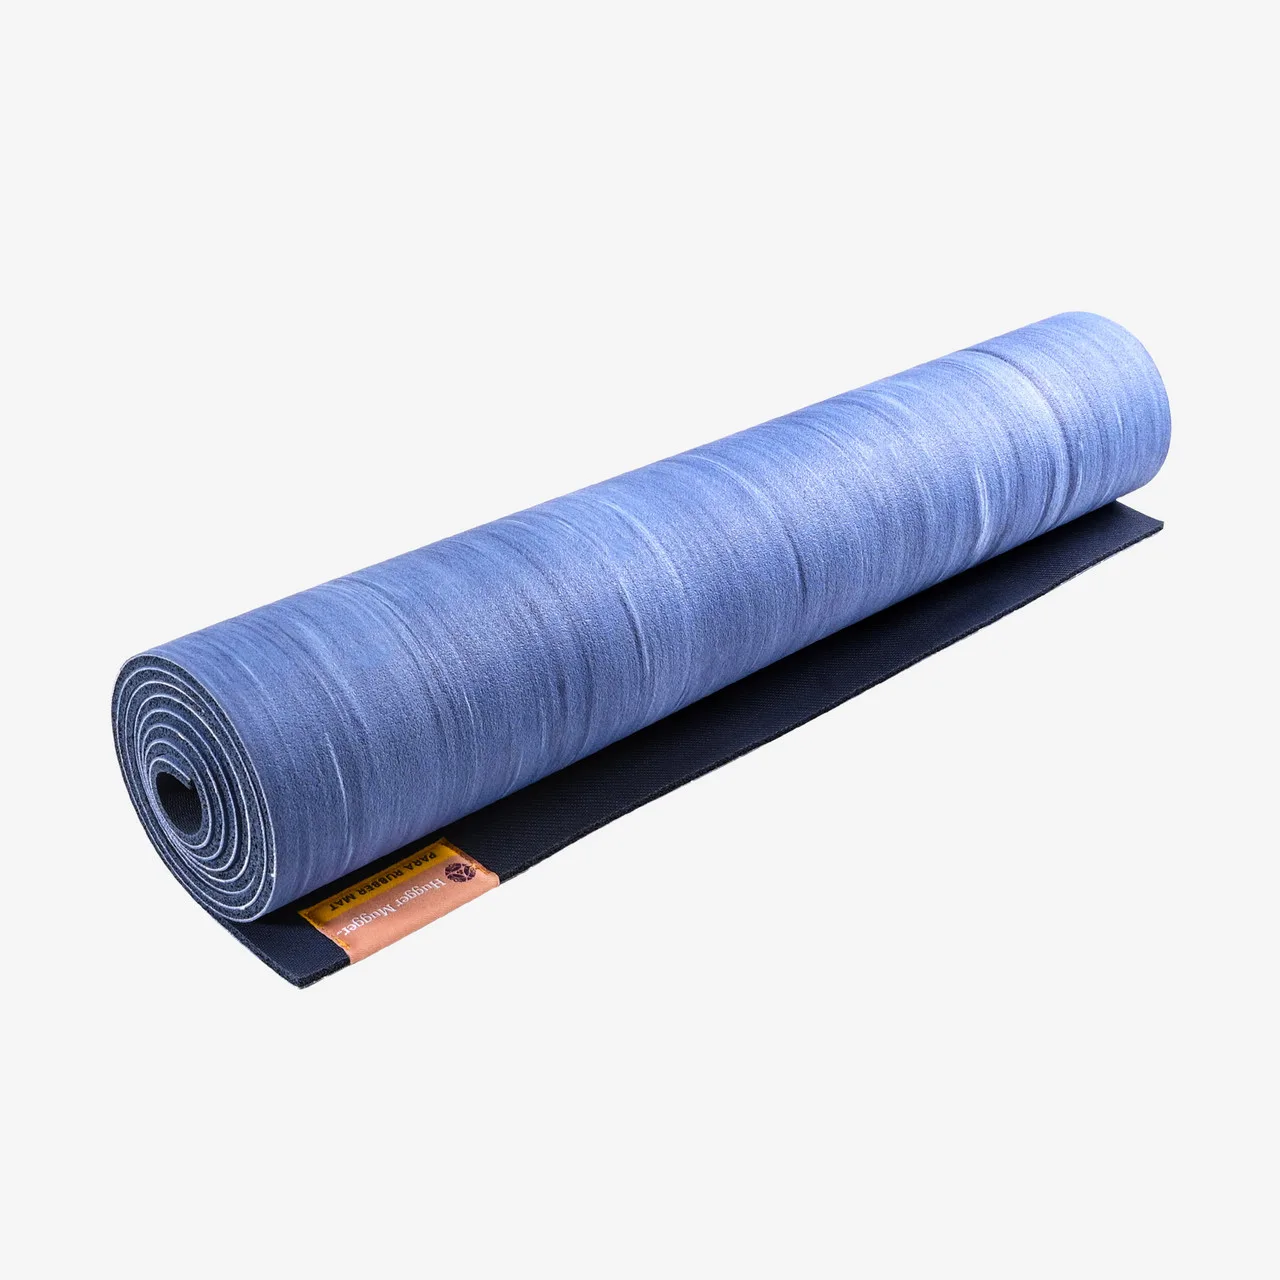 Latex Free Colorful Pvc Tpe Rubber Jute Yoga Mat, High Quality